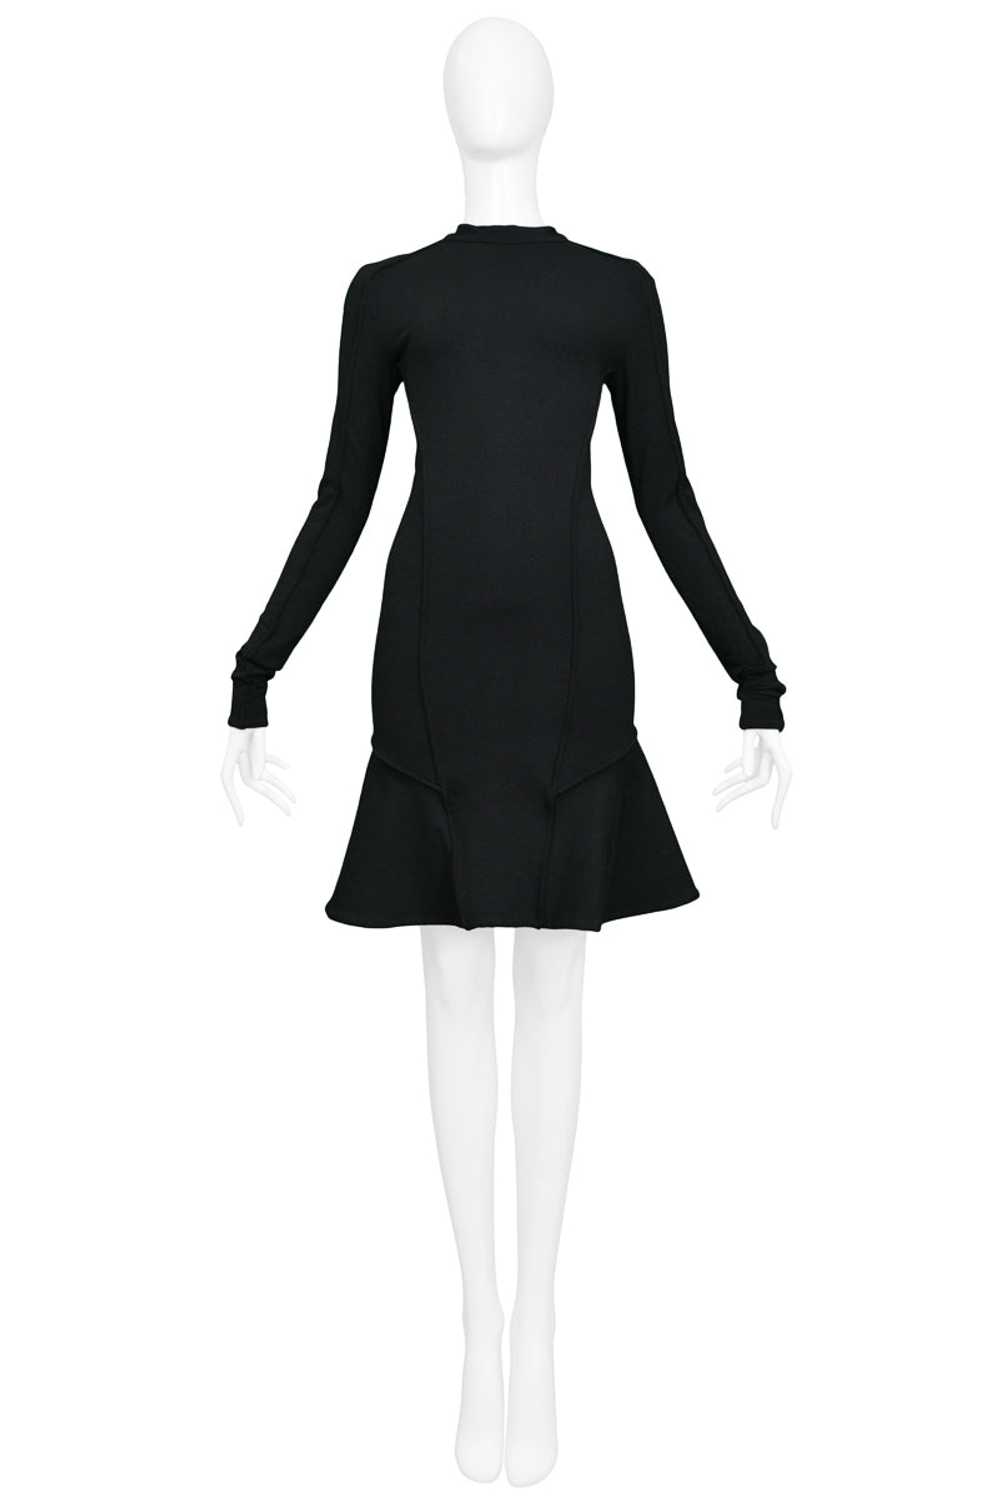 BALENCIAGA BY GHESQUIERE BLACK SCUBA DRESS WITH F… - image 1